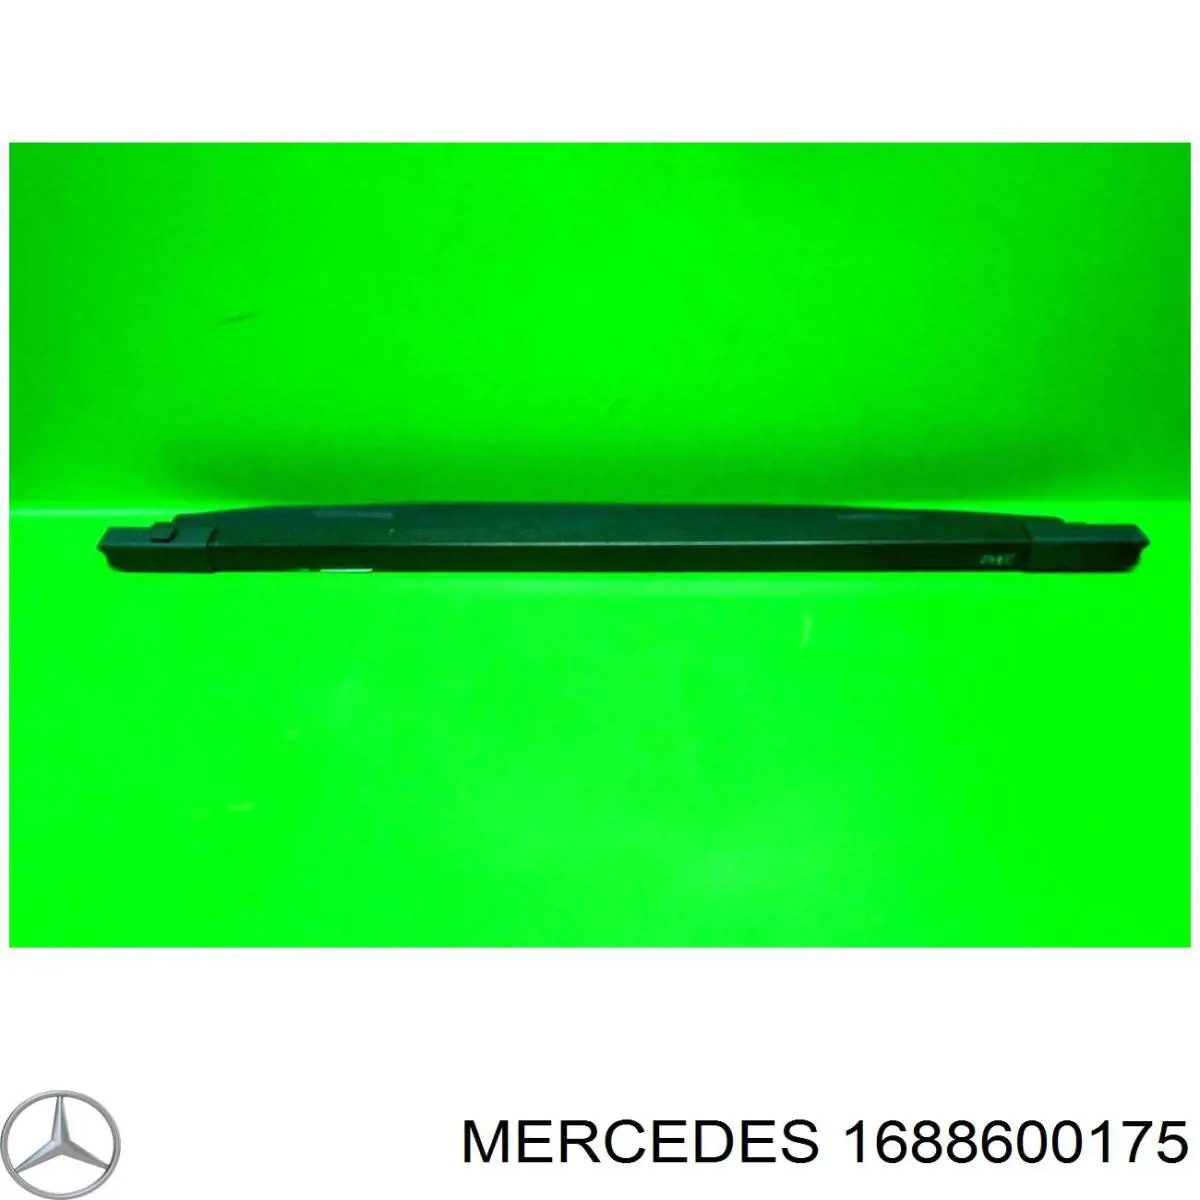 A1688600175 Mercedes cortina del compartimento de carga